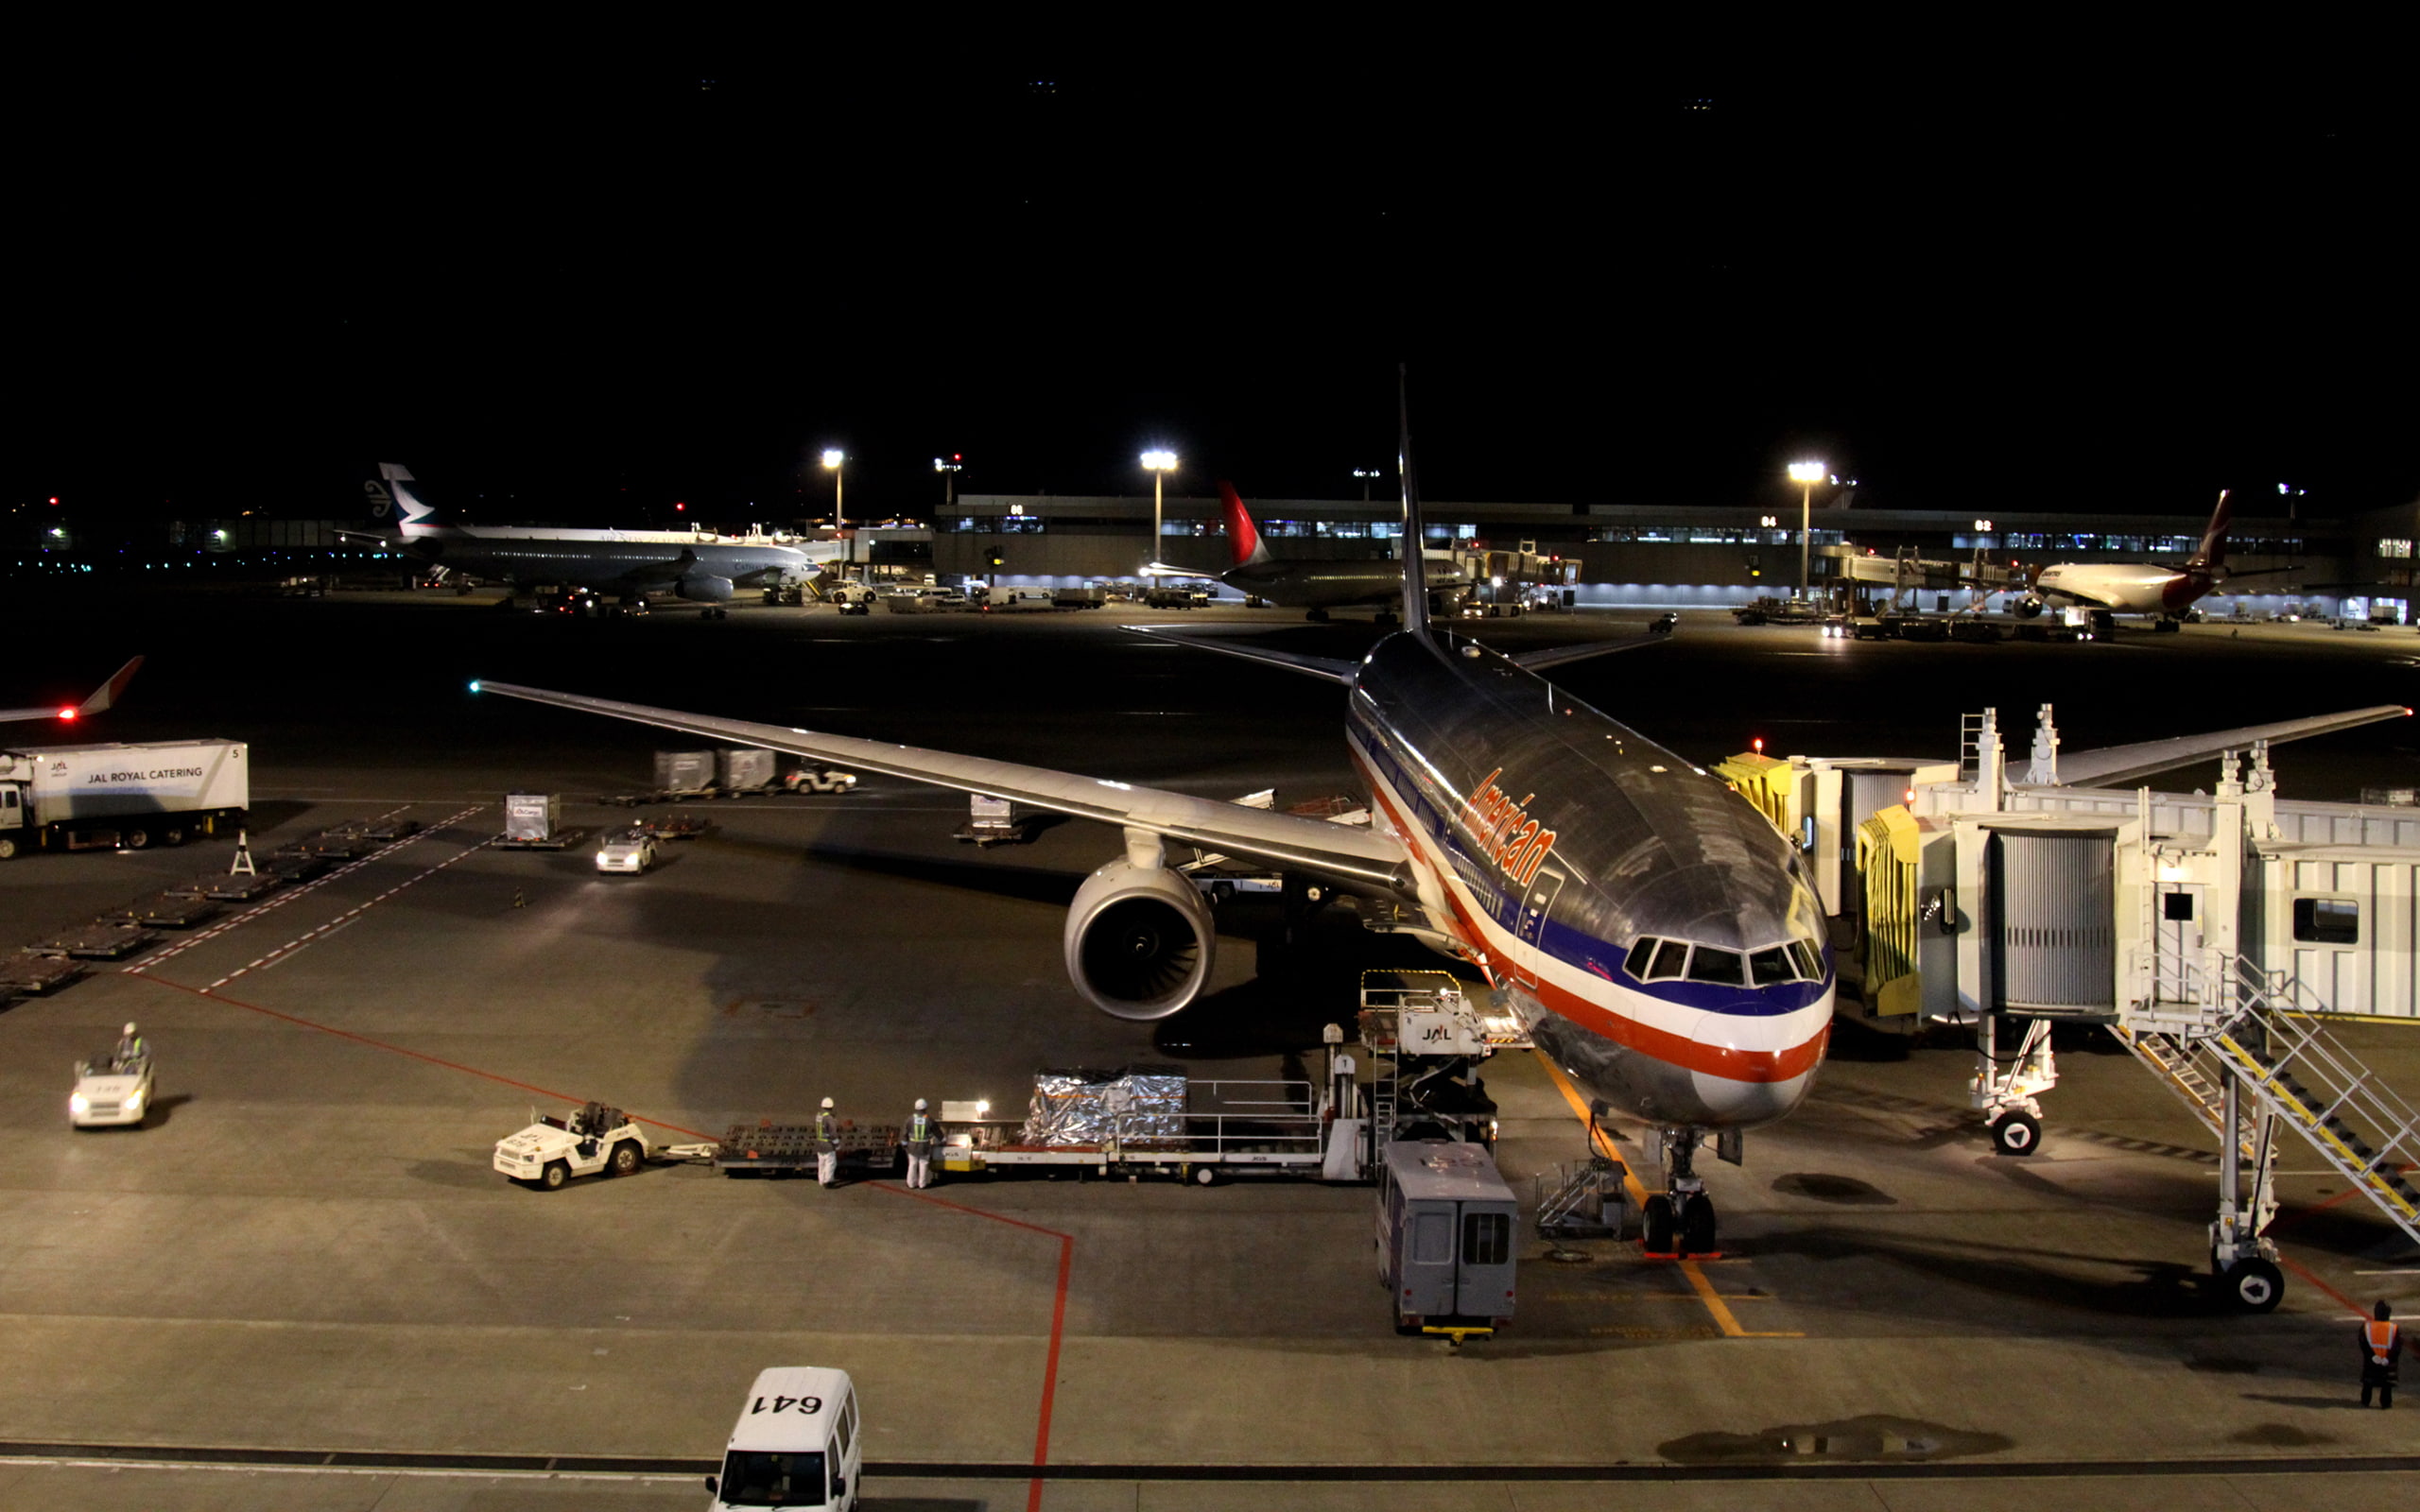 Boeing 777, aircraft, airport, night, transport, transportation